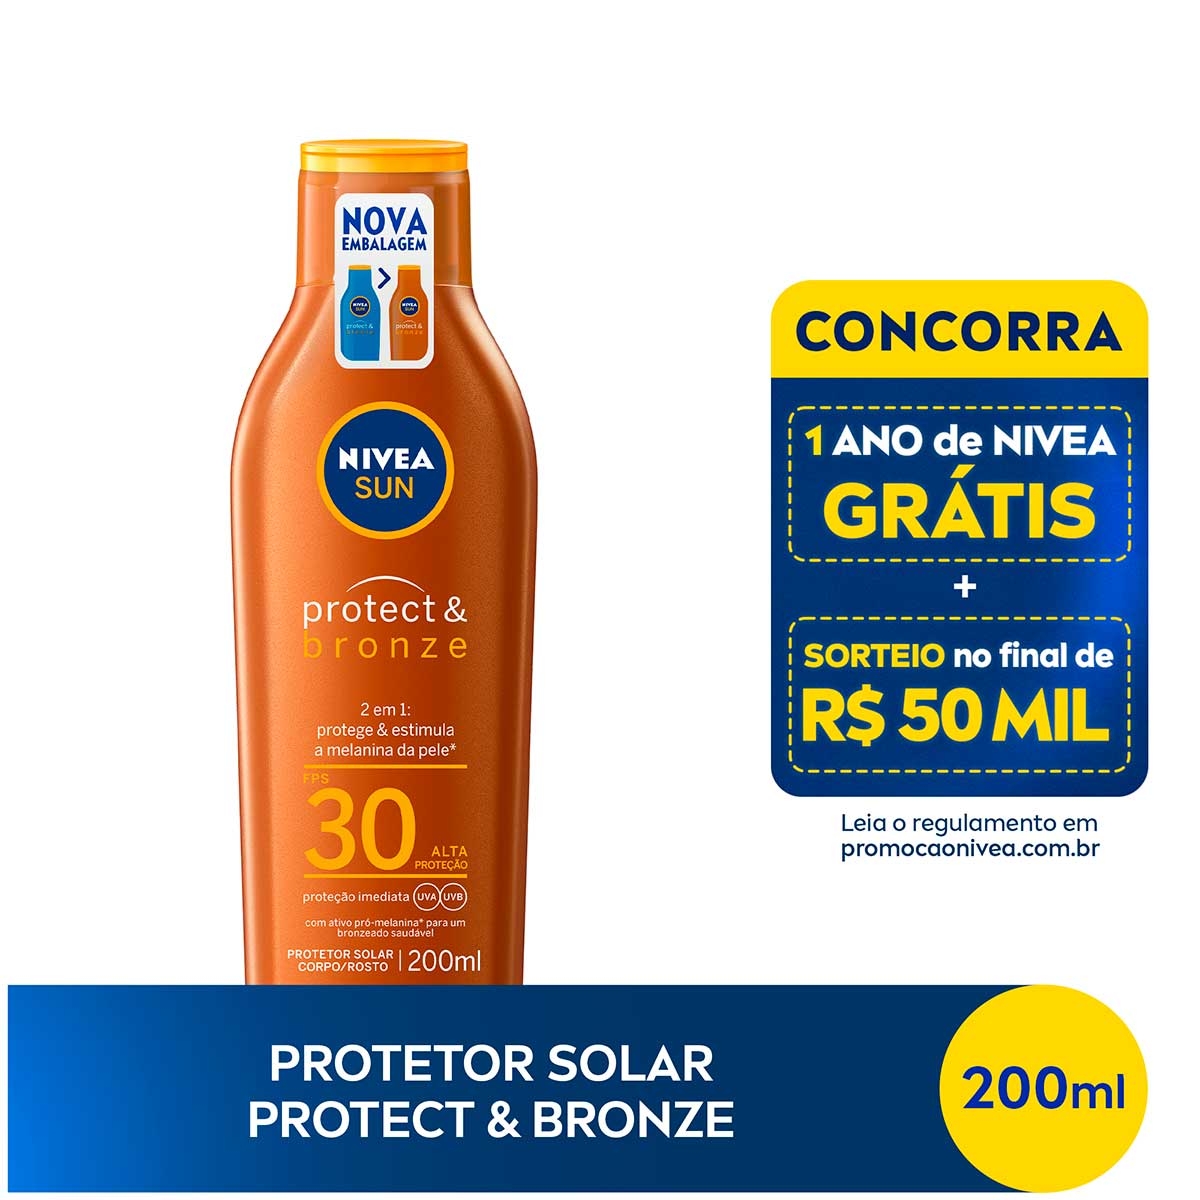 Protetor Solar Nivea Sun Protect & Bronze FPS 30 com 200ml 200ml